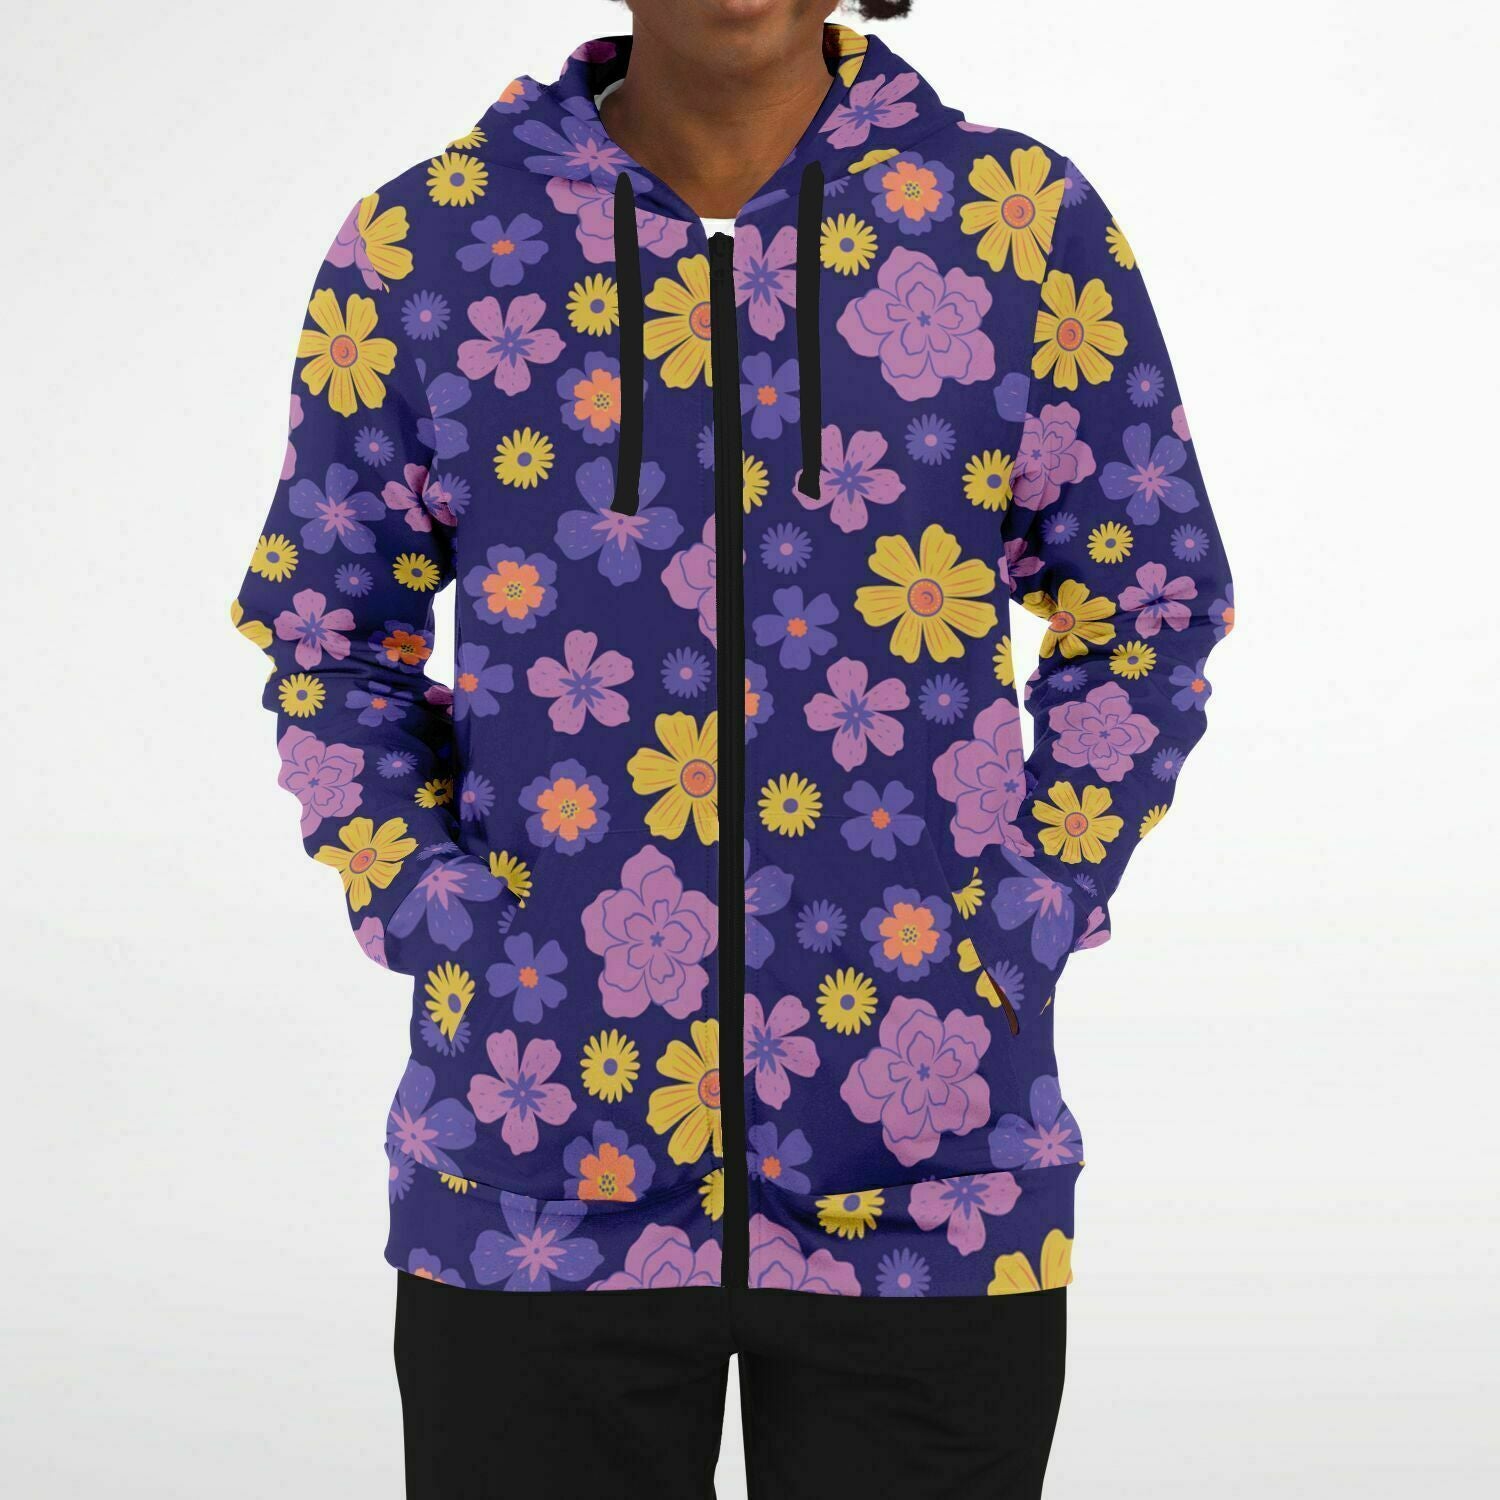 Floral Zip Up Hoodie, Blue Purple Flowers Front Zipper Pocket Men Women Unisex Adult Aesthetic Graphic Cotton Fleece Hooded Sweatshirt Starcove Fashion